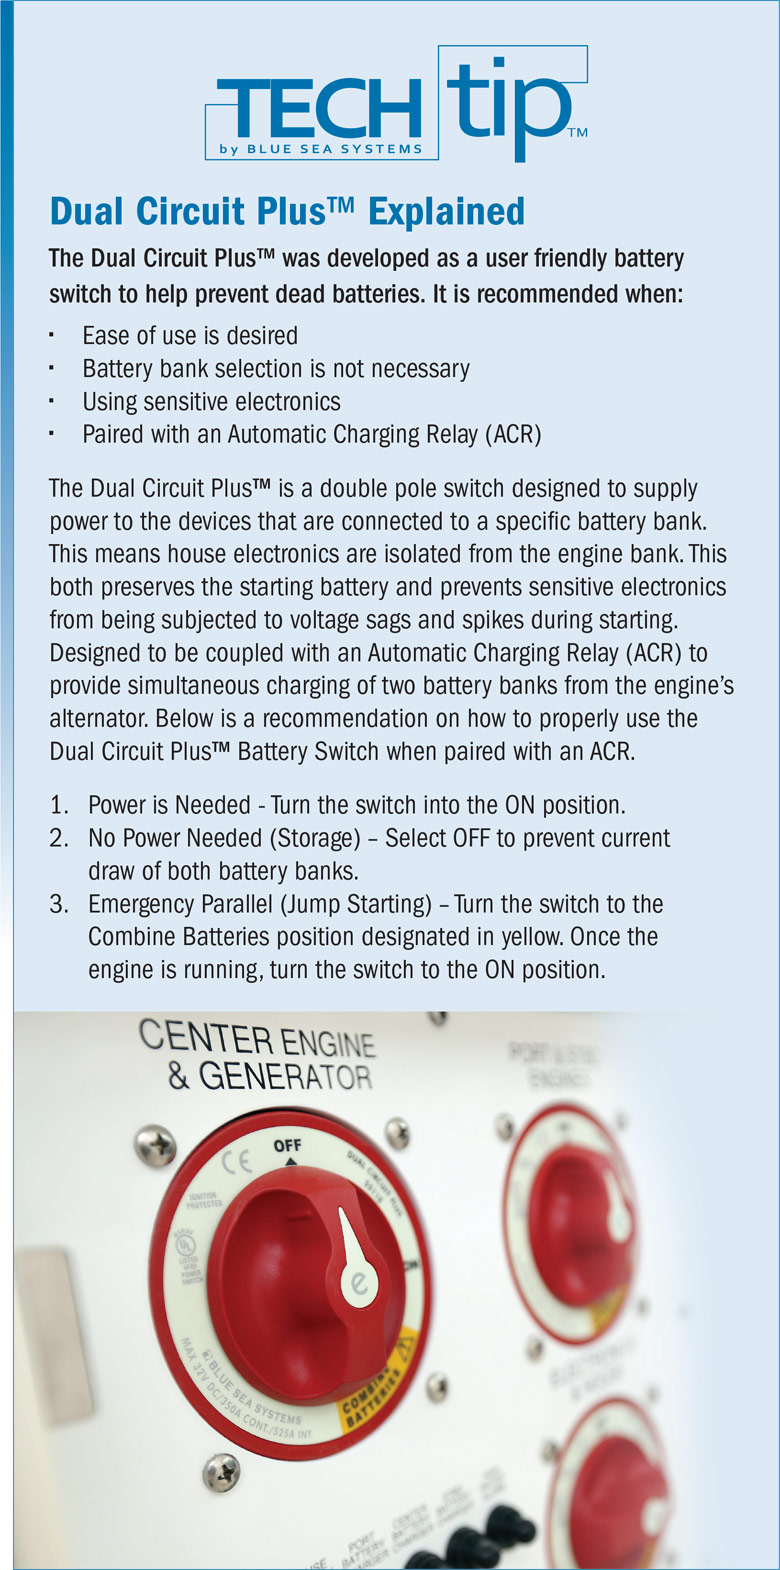 Infographic: Dual Circuit Plus Explained